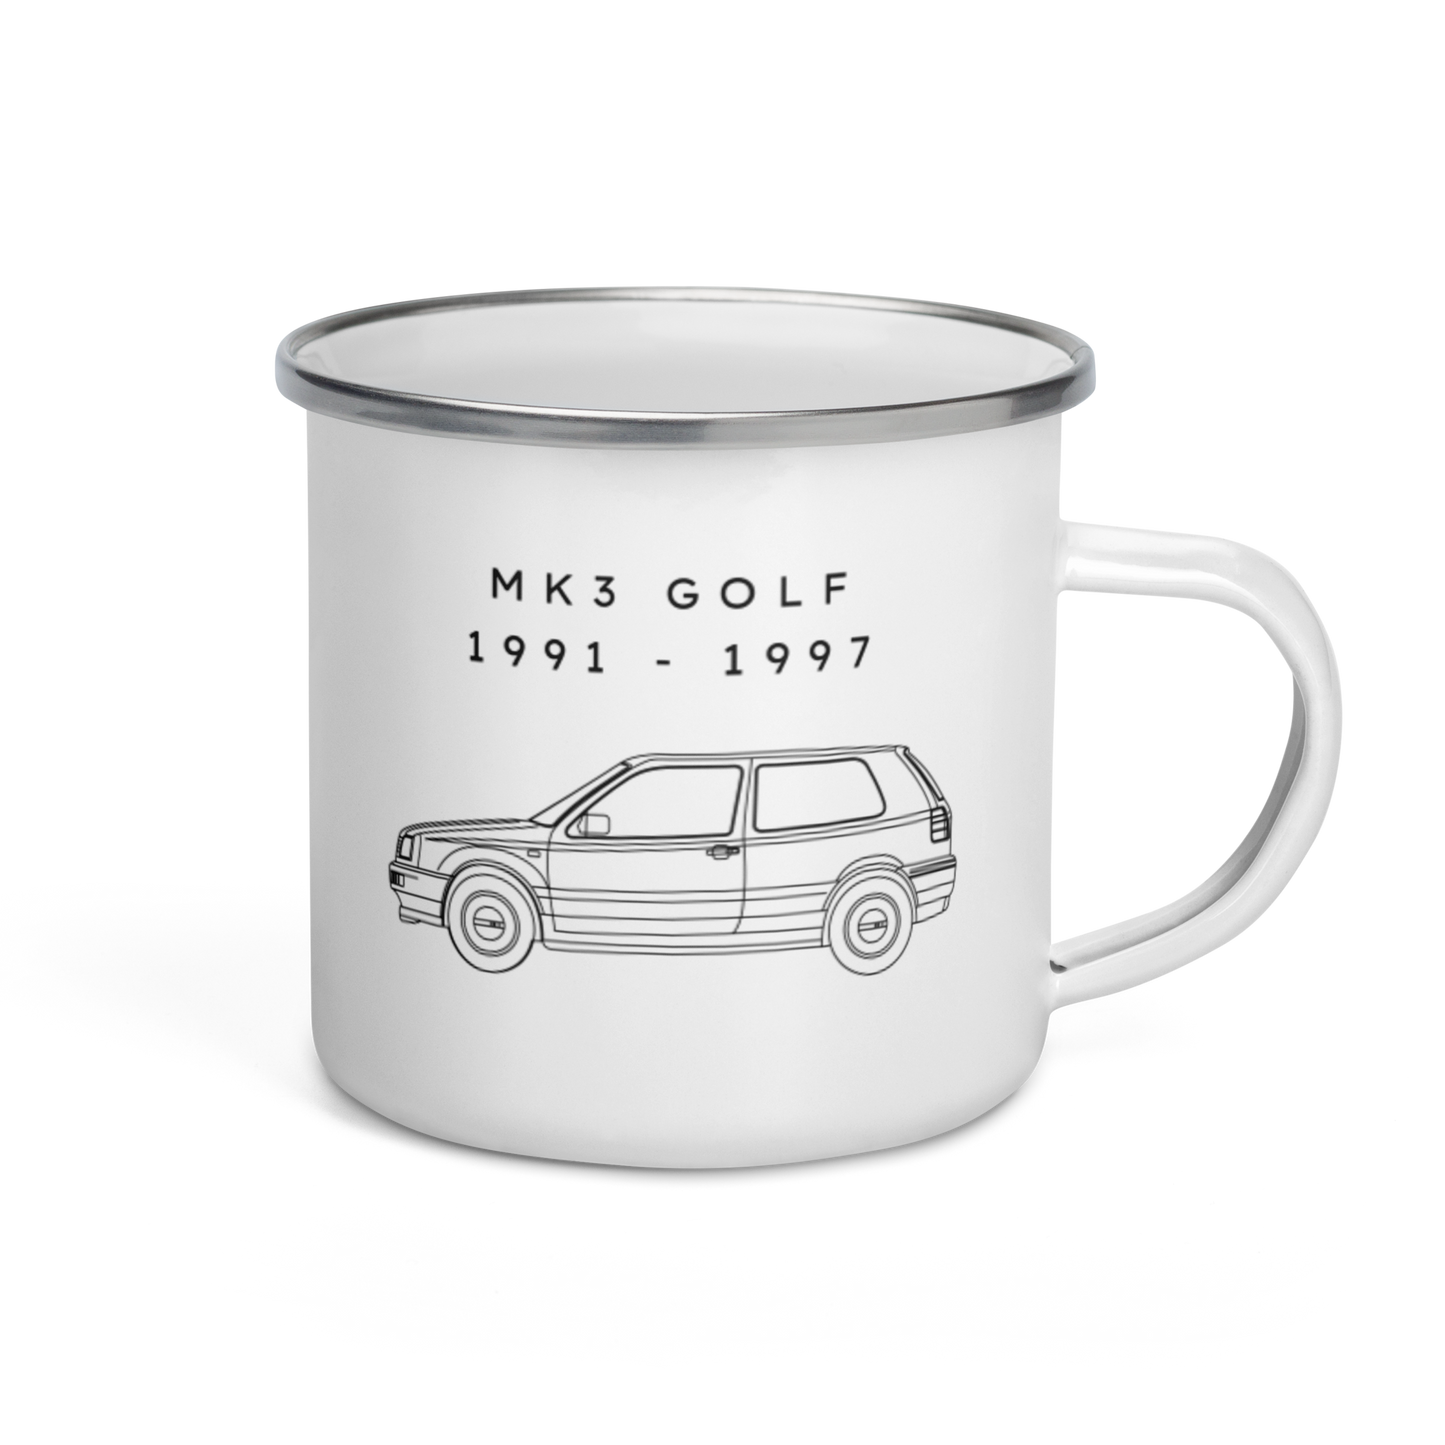 Golf Mk3 Enamel Camping Mug Blueprint Fashion EU